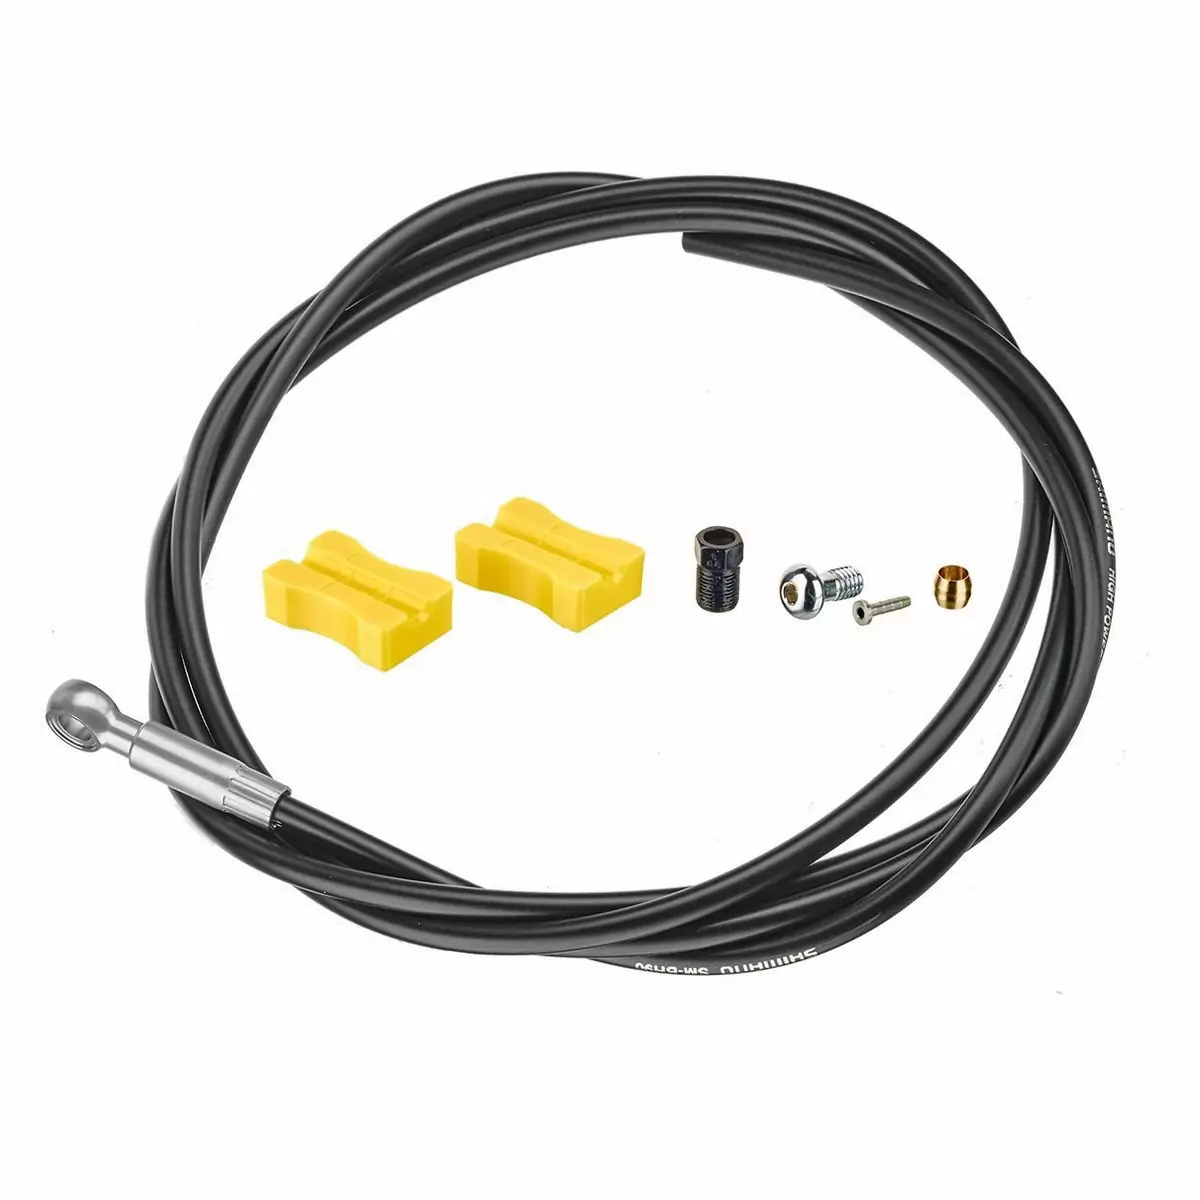 Rear hydraulic cable kit SM-BH90-SBLS 1700mm XT M8020 - image